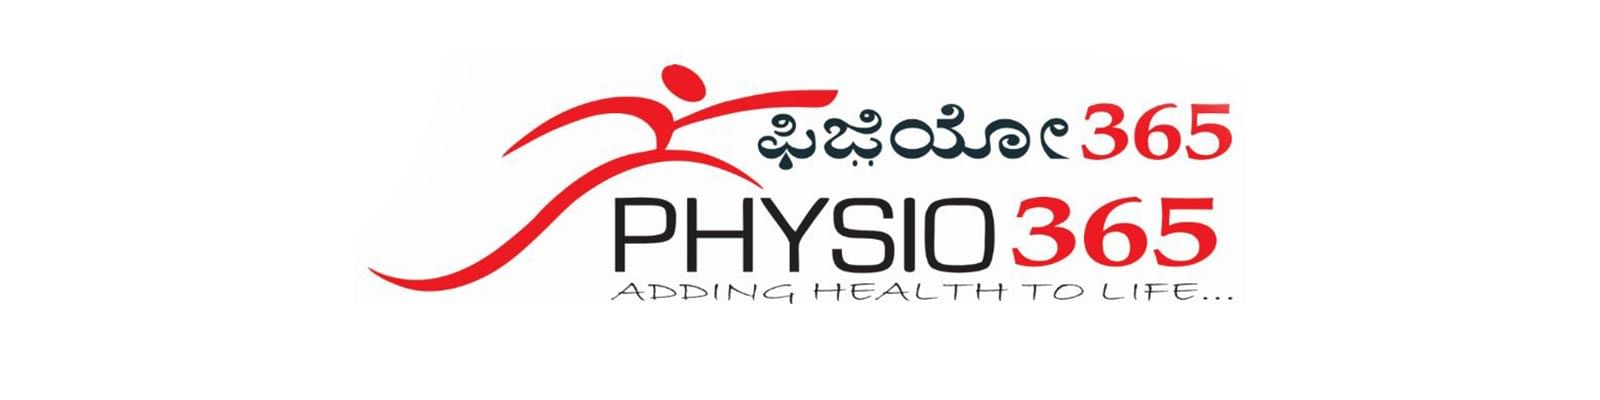 Physio 365 - RT Nagar